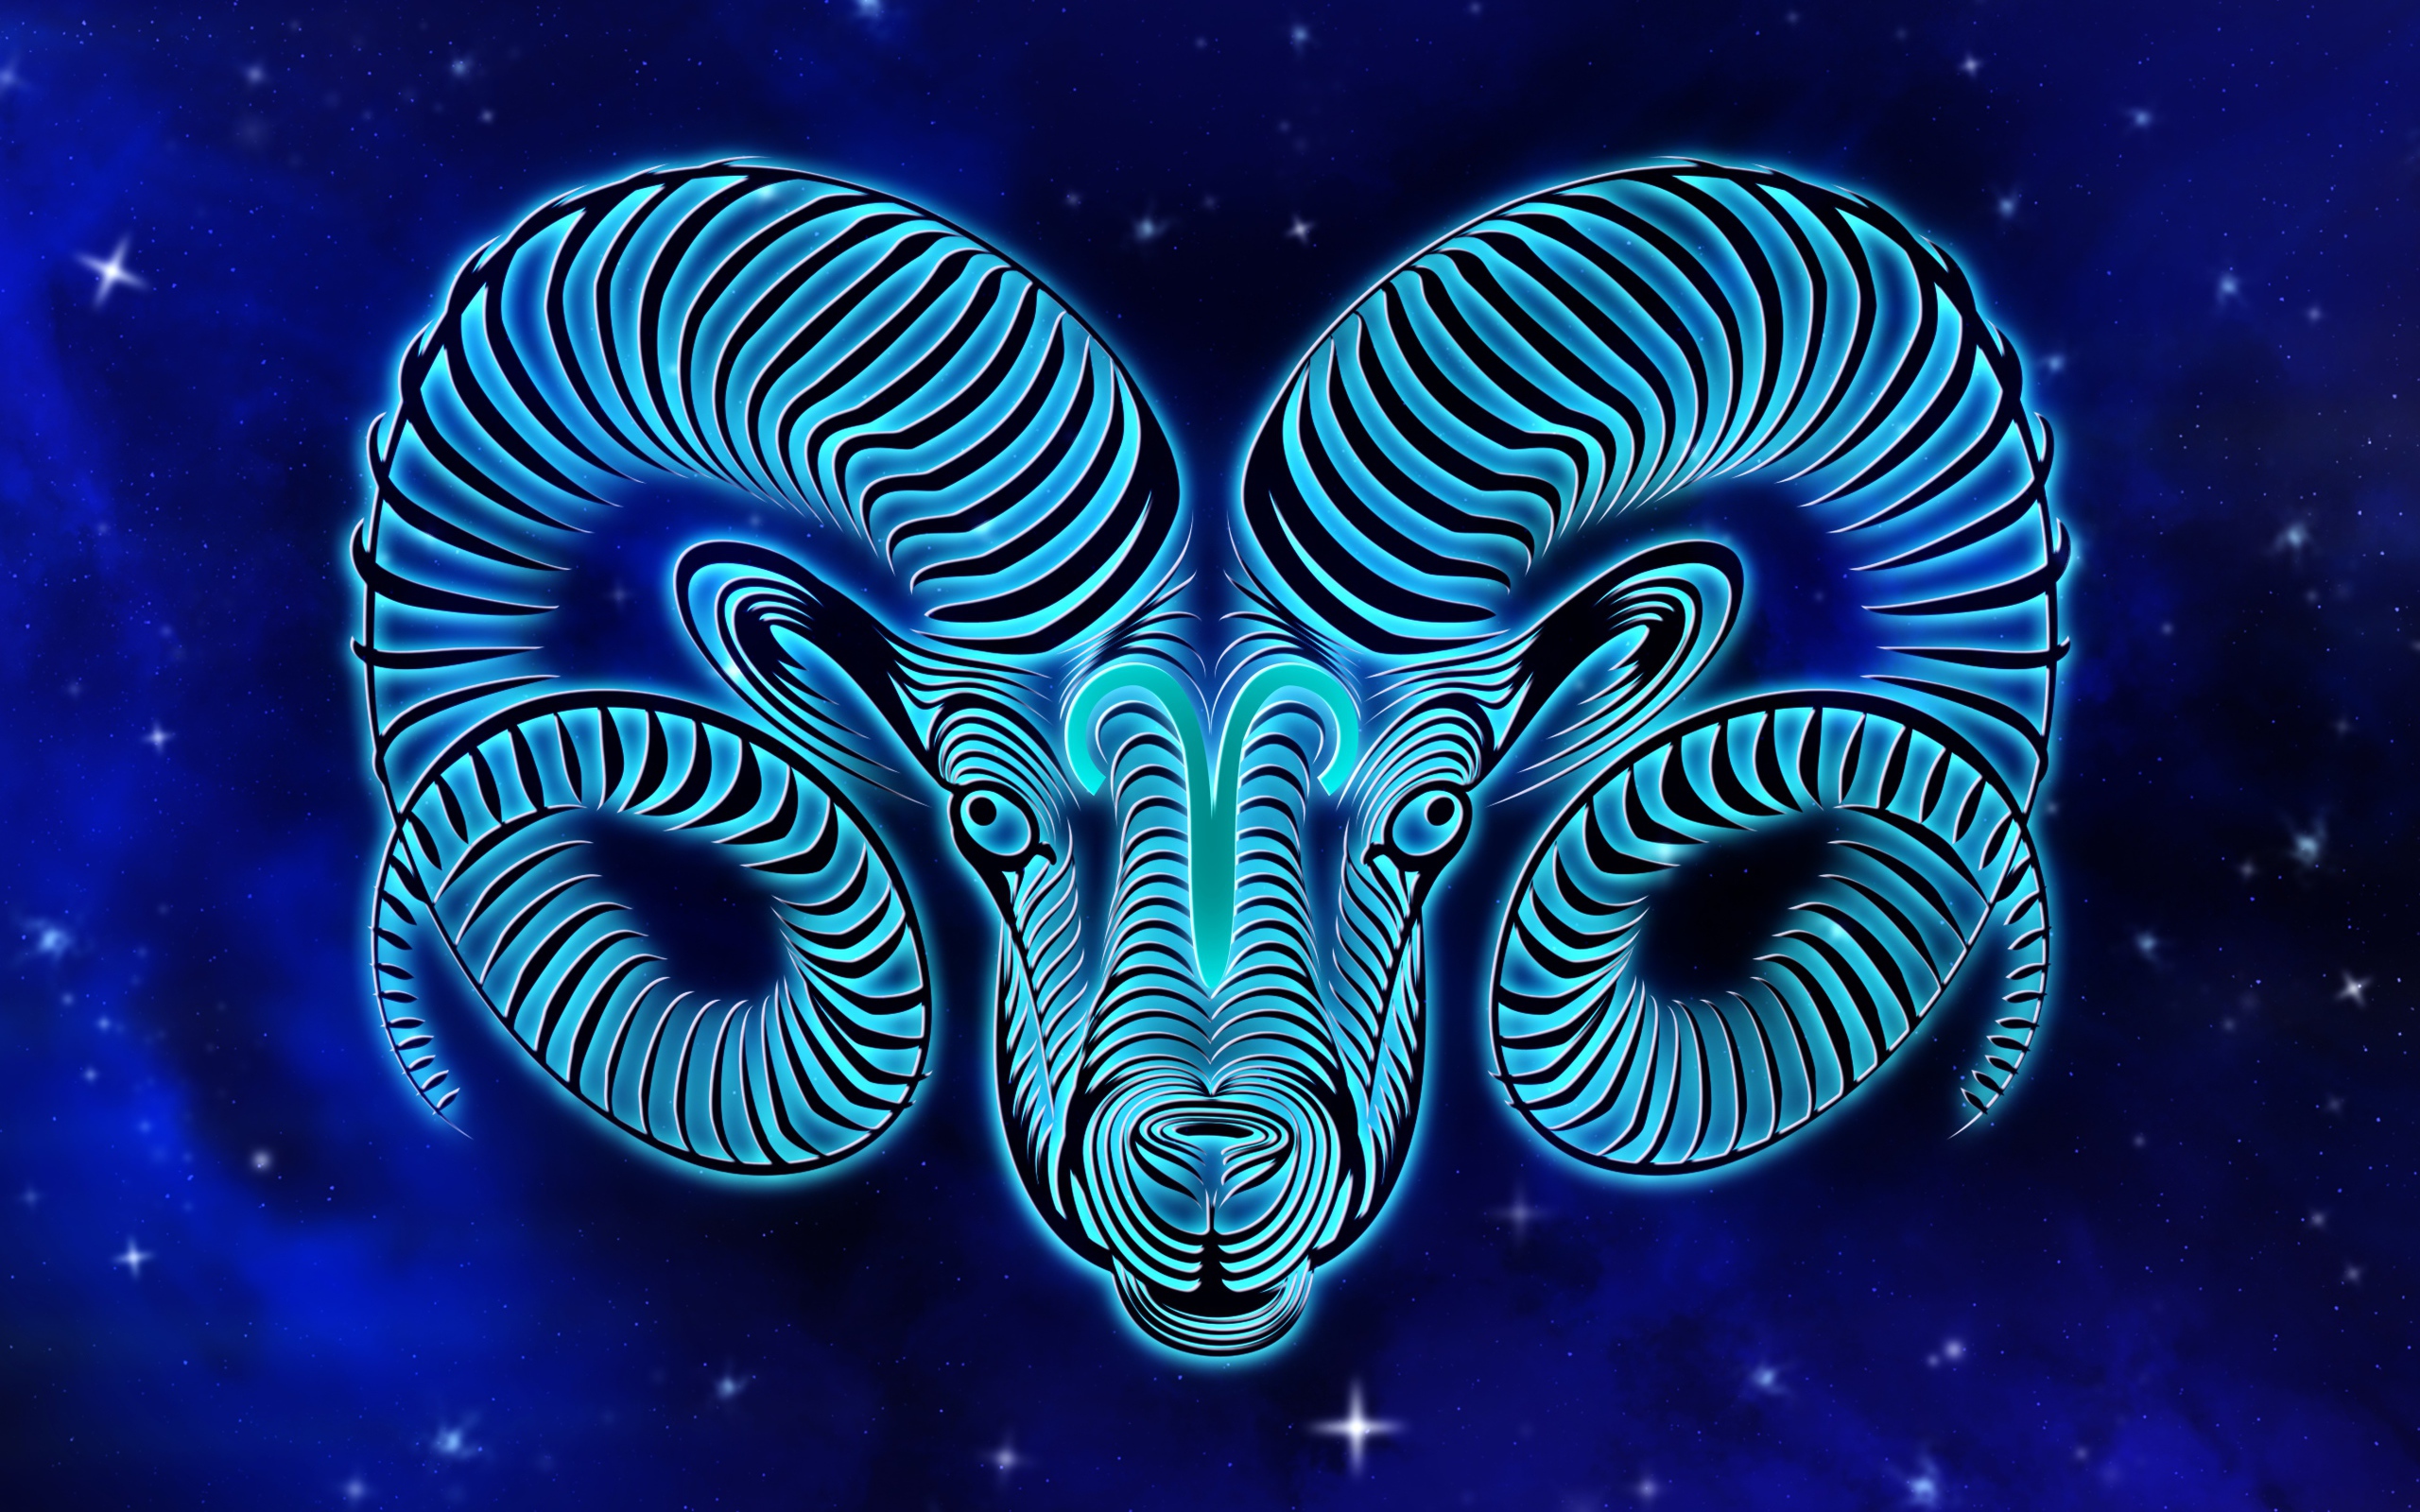 Beautiful zodiac sign Aries on blue background